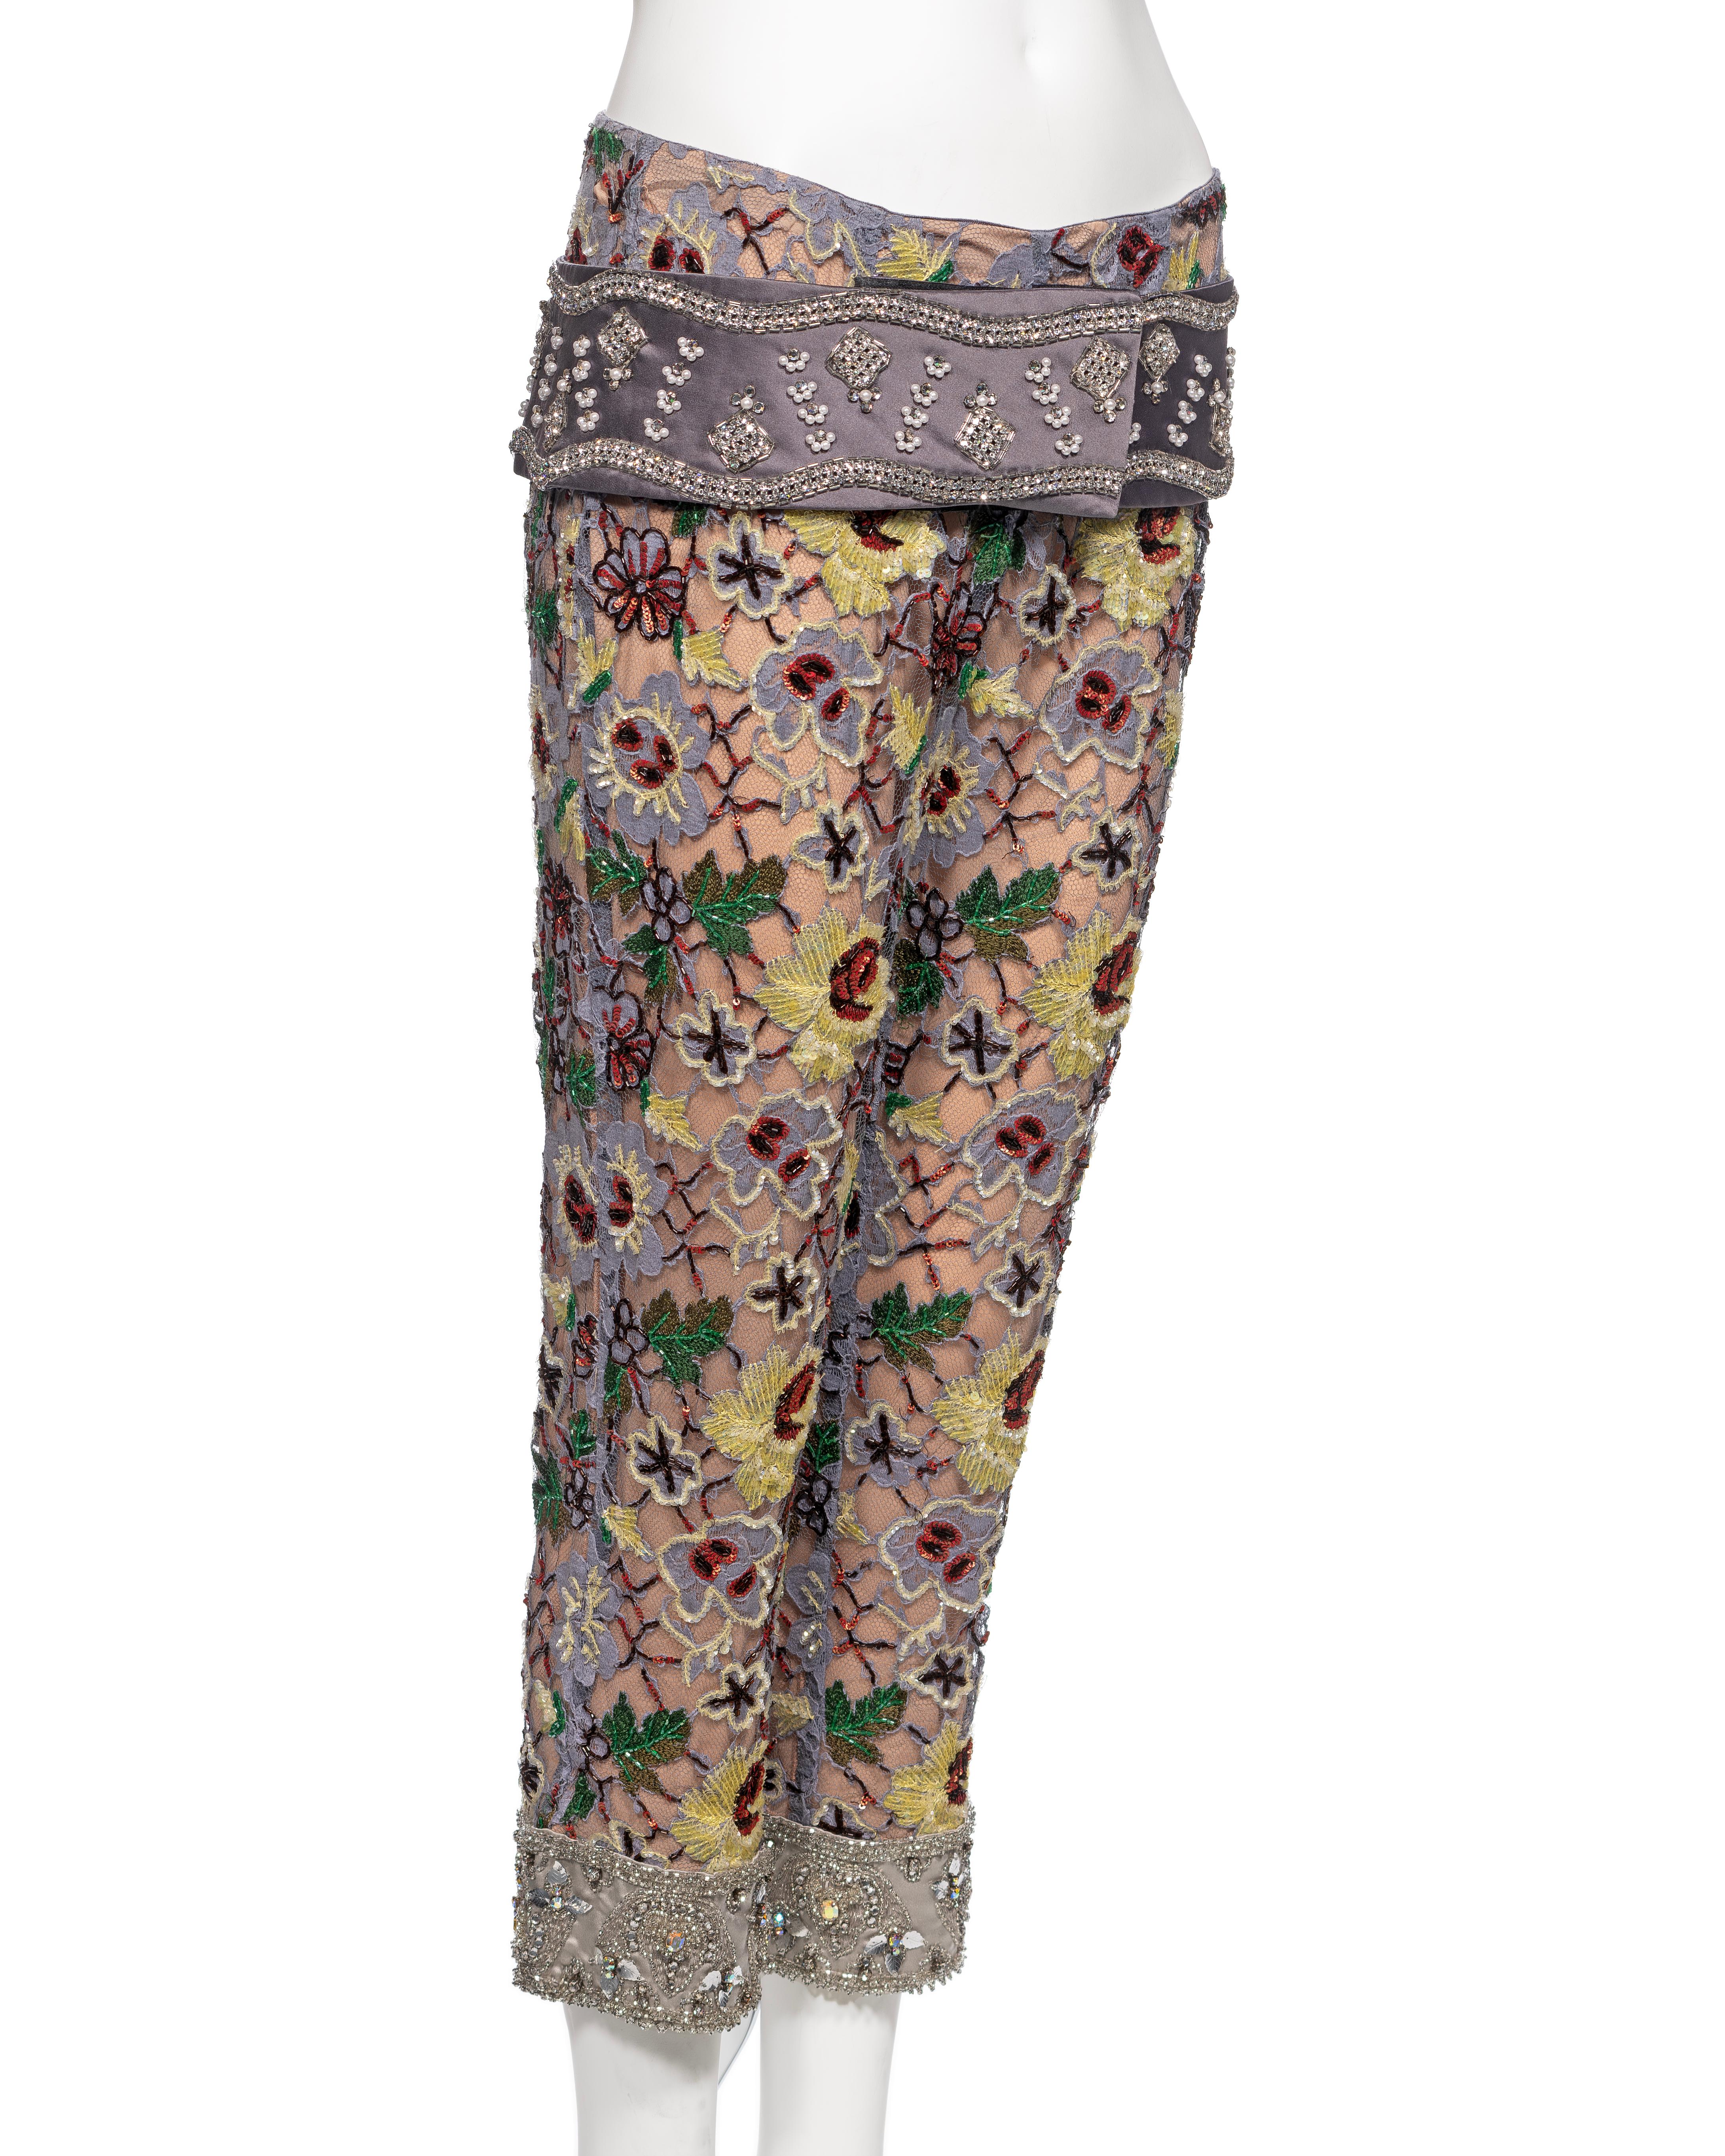 Dolce & Gabbana Embellished Lace Capri Pants and Belt Set, FW 1999 For Sale 4